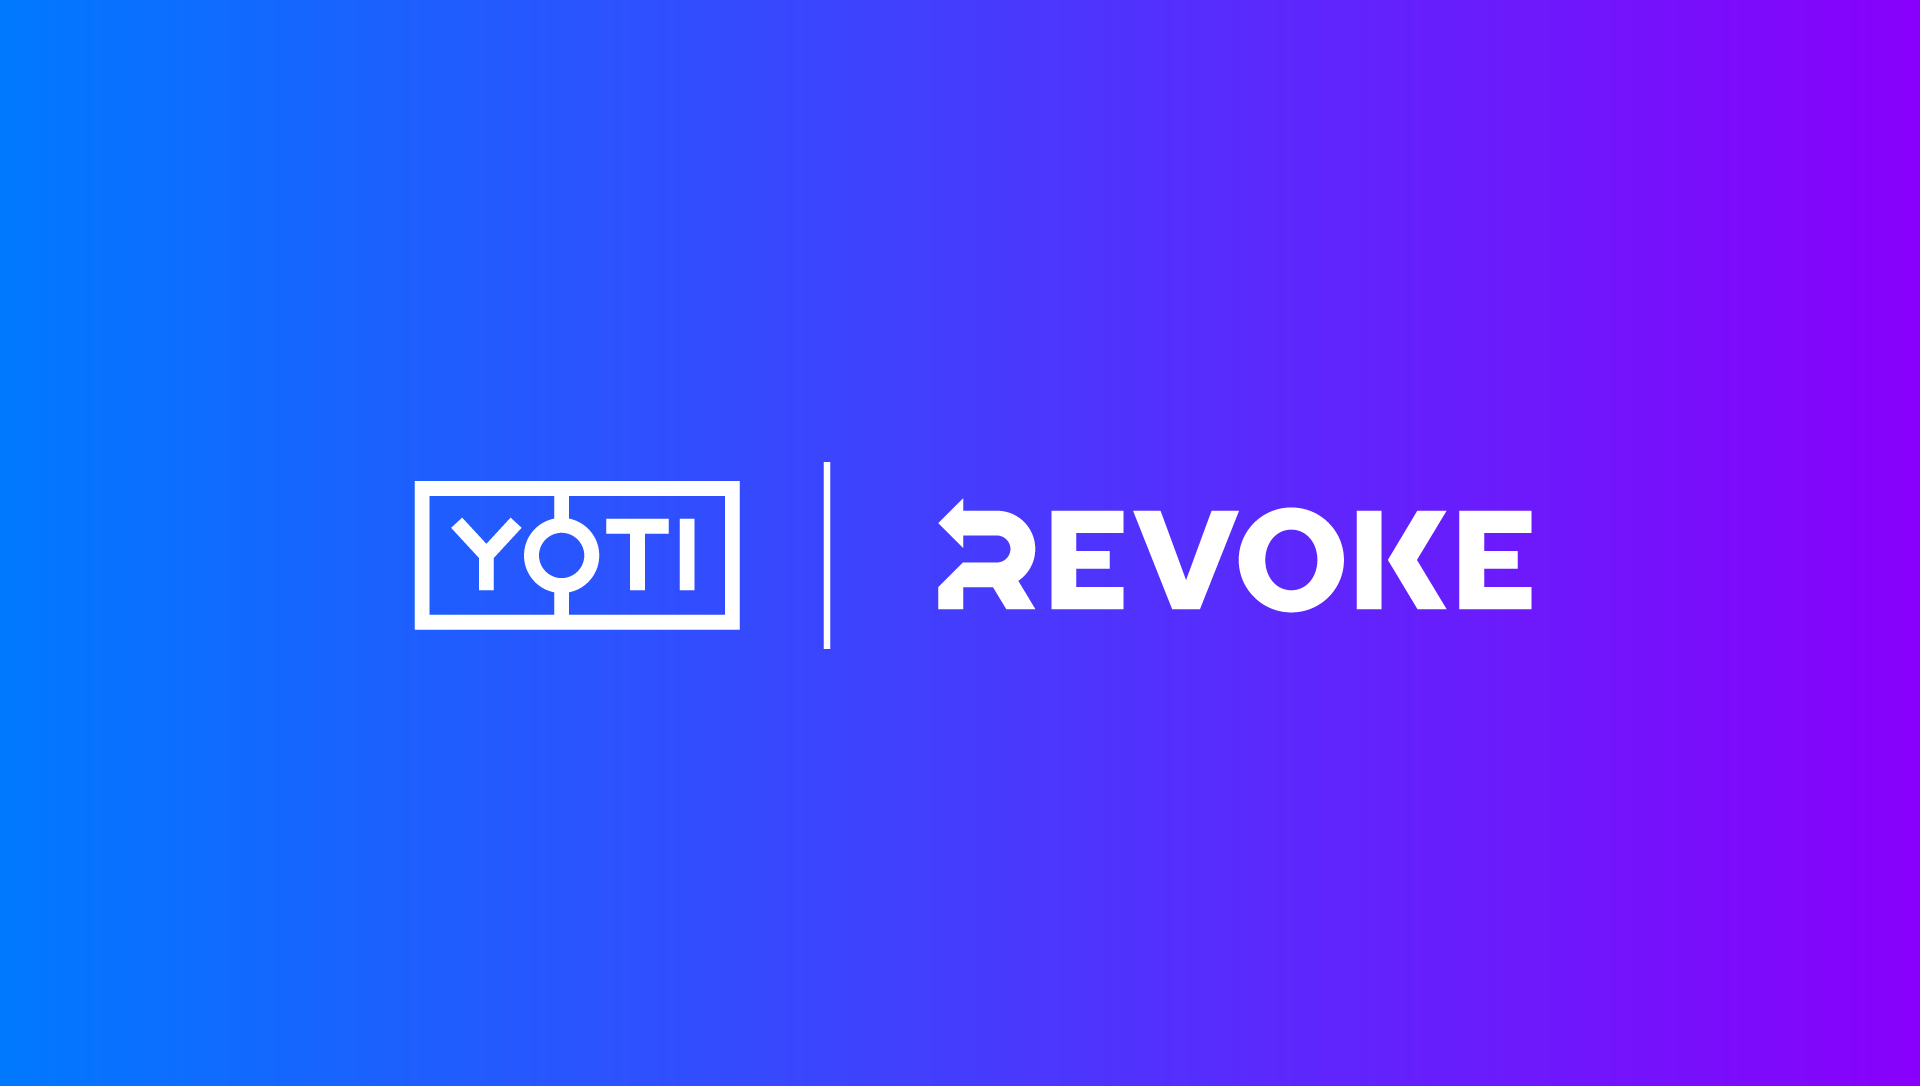 Yoti partners with Revoke to help users to reduce their digital footprint